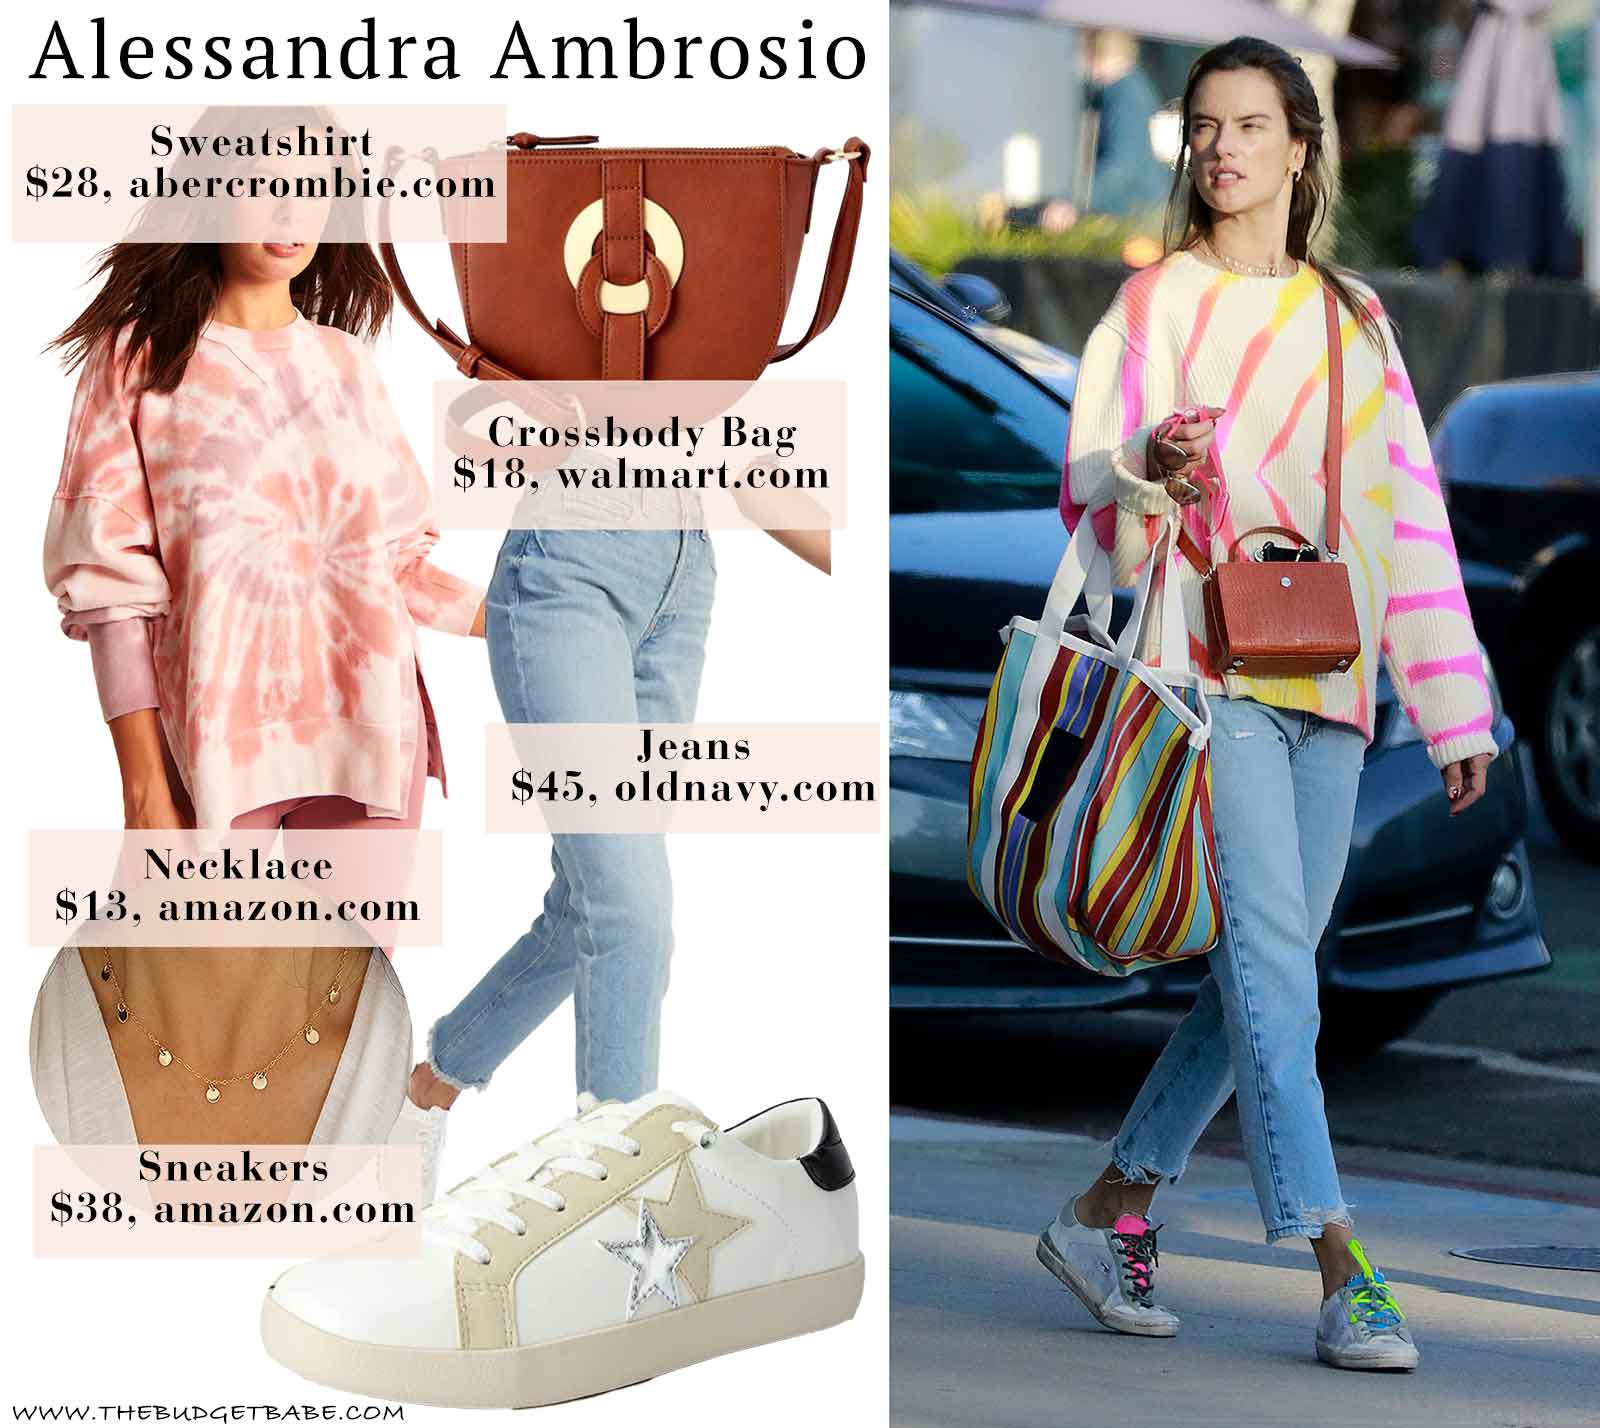 Alessandra Ambrosio wears The Elder Statesman sweater